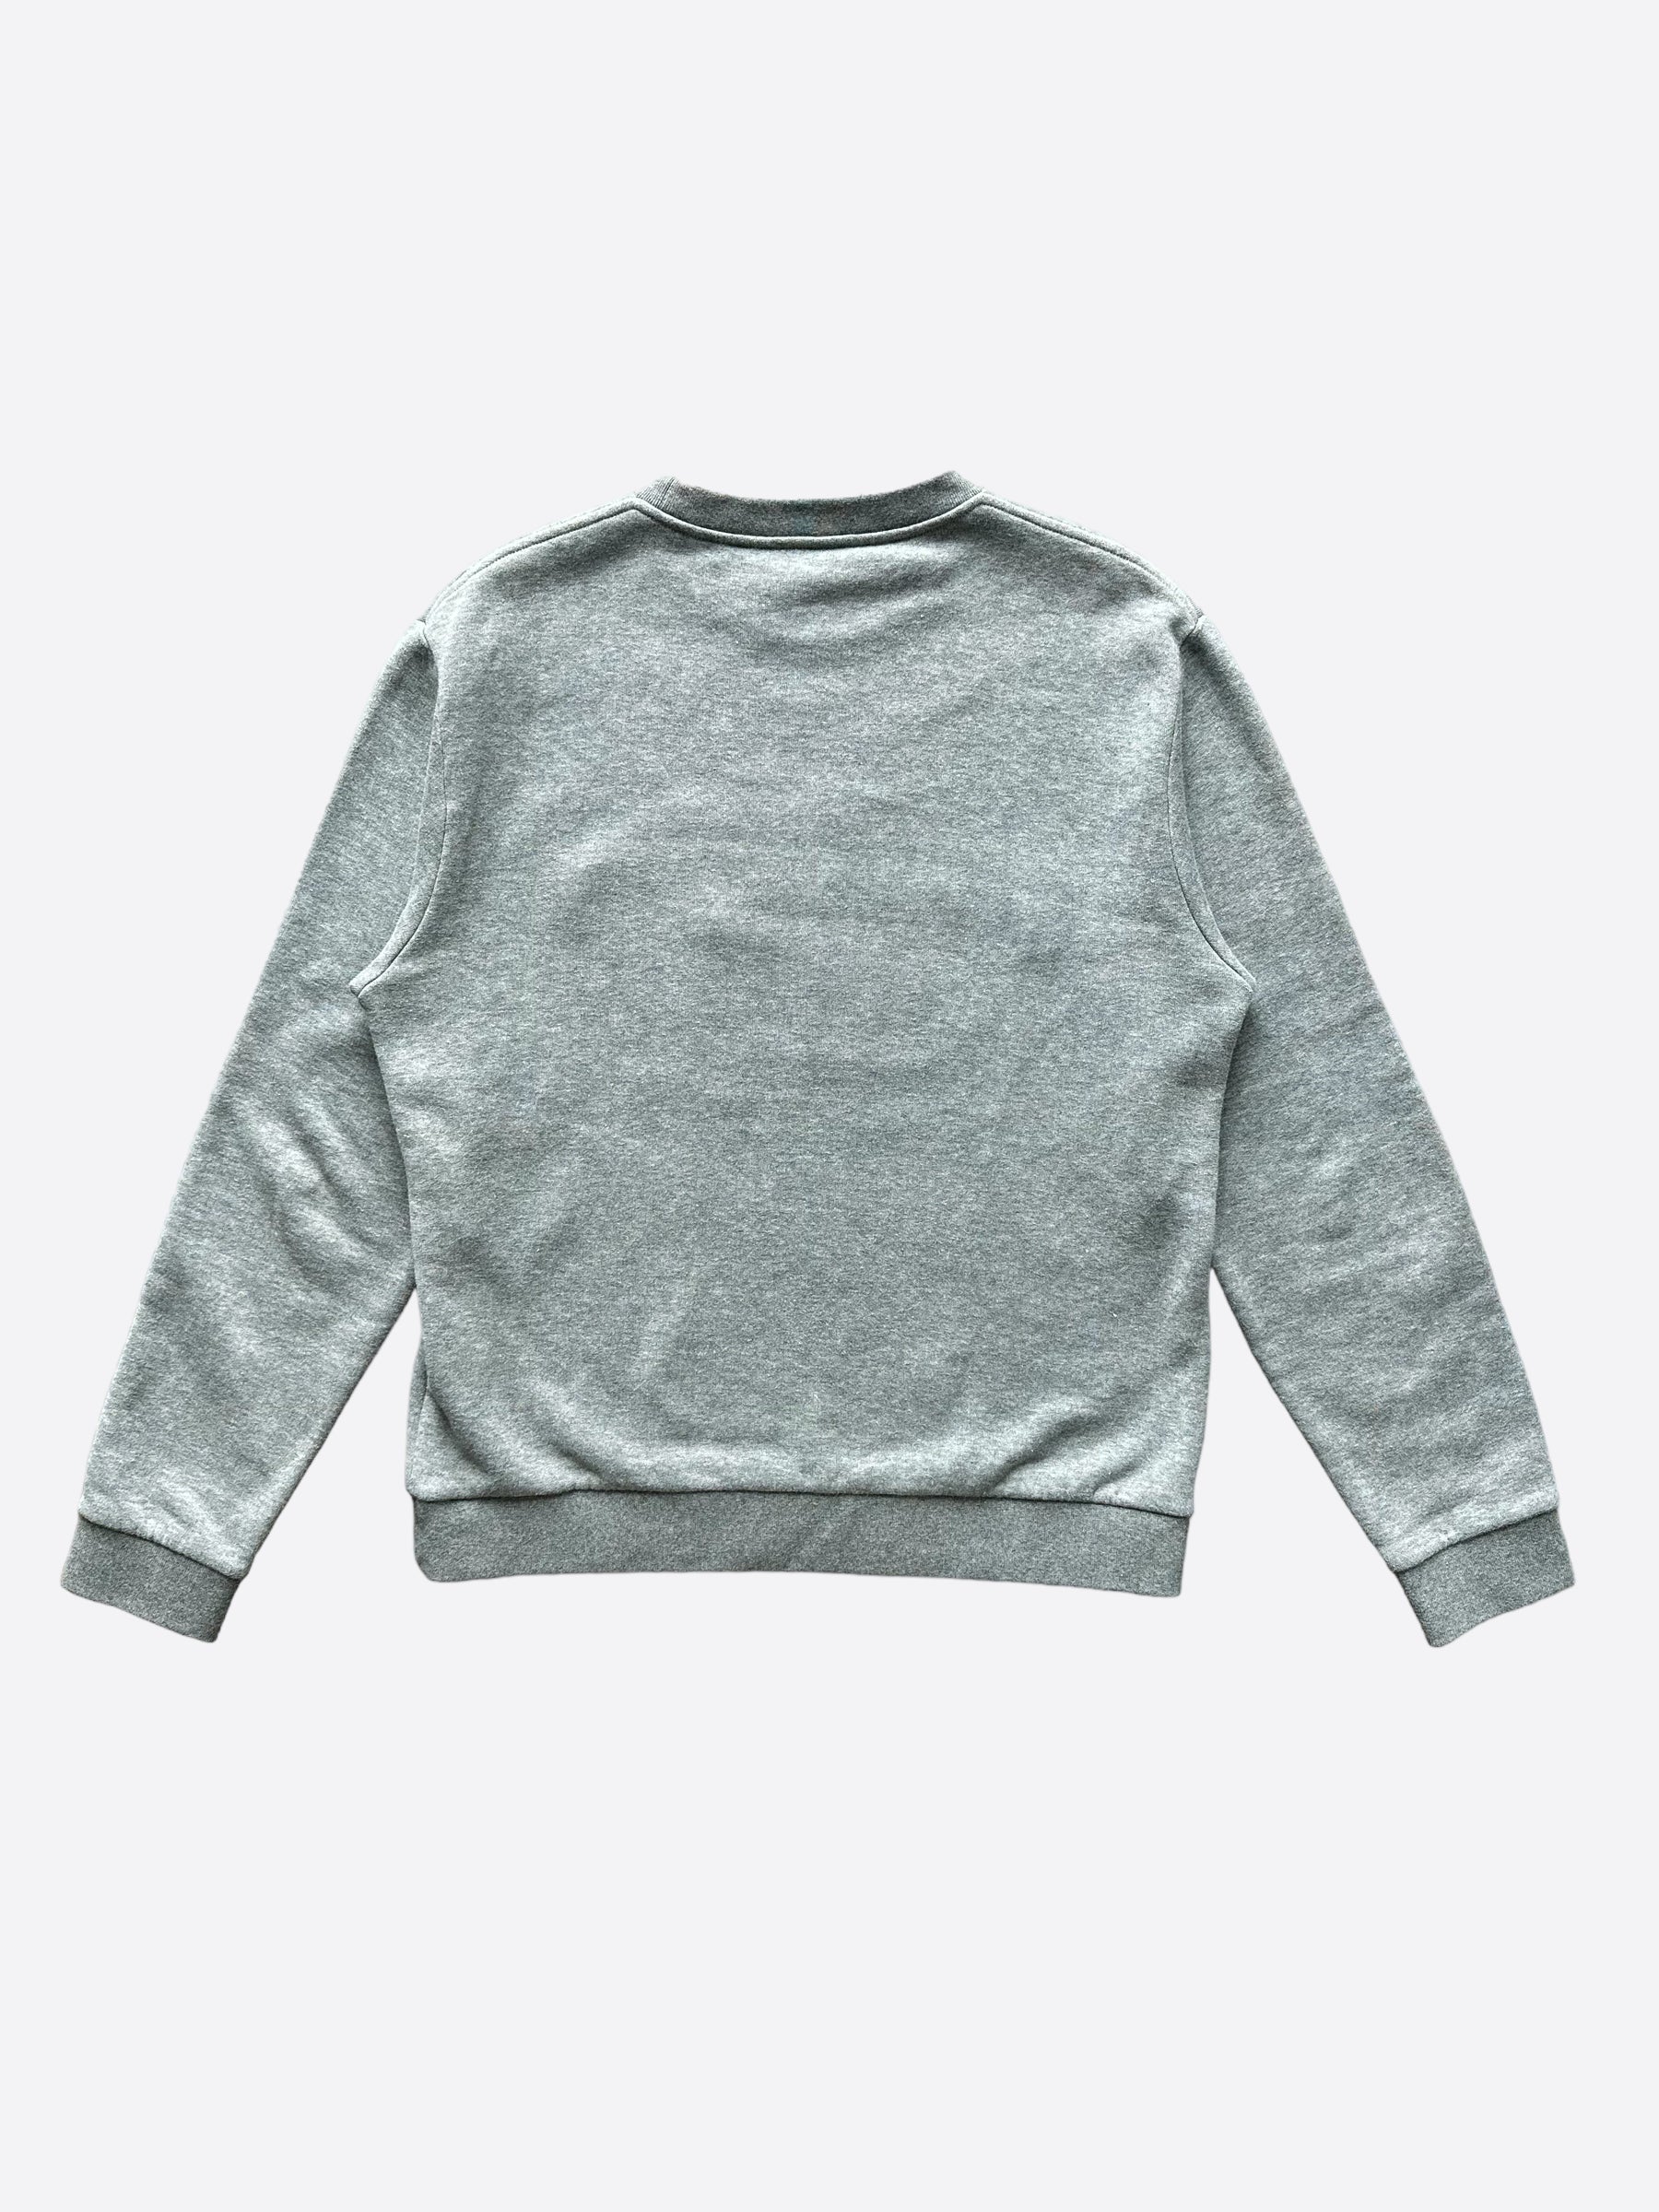 vuitton grey sweatshirt